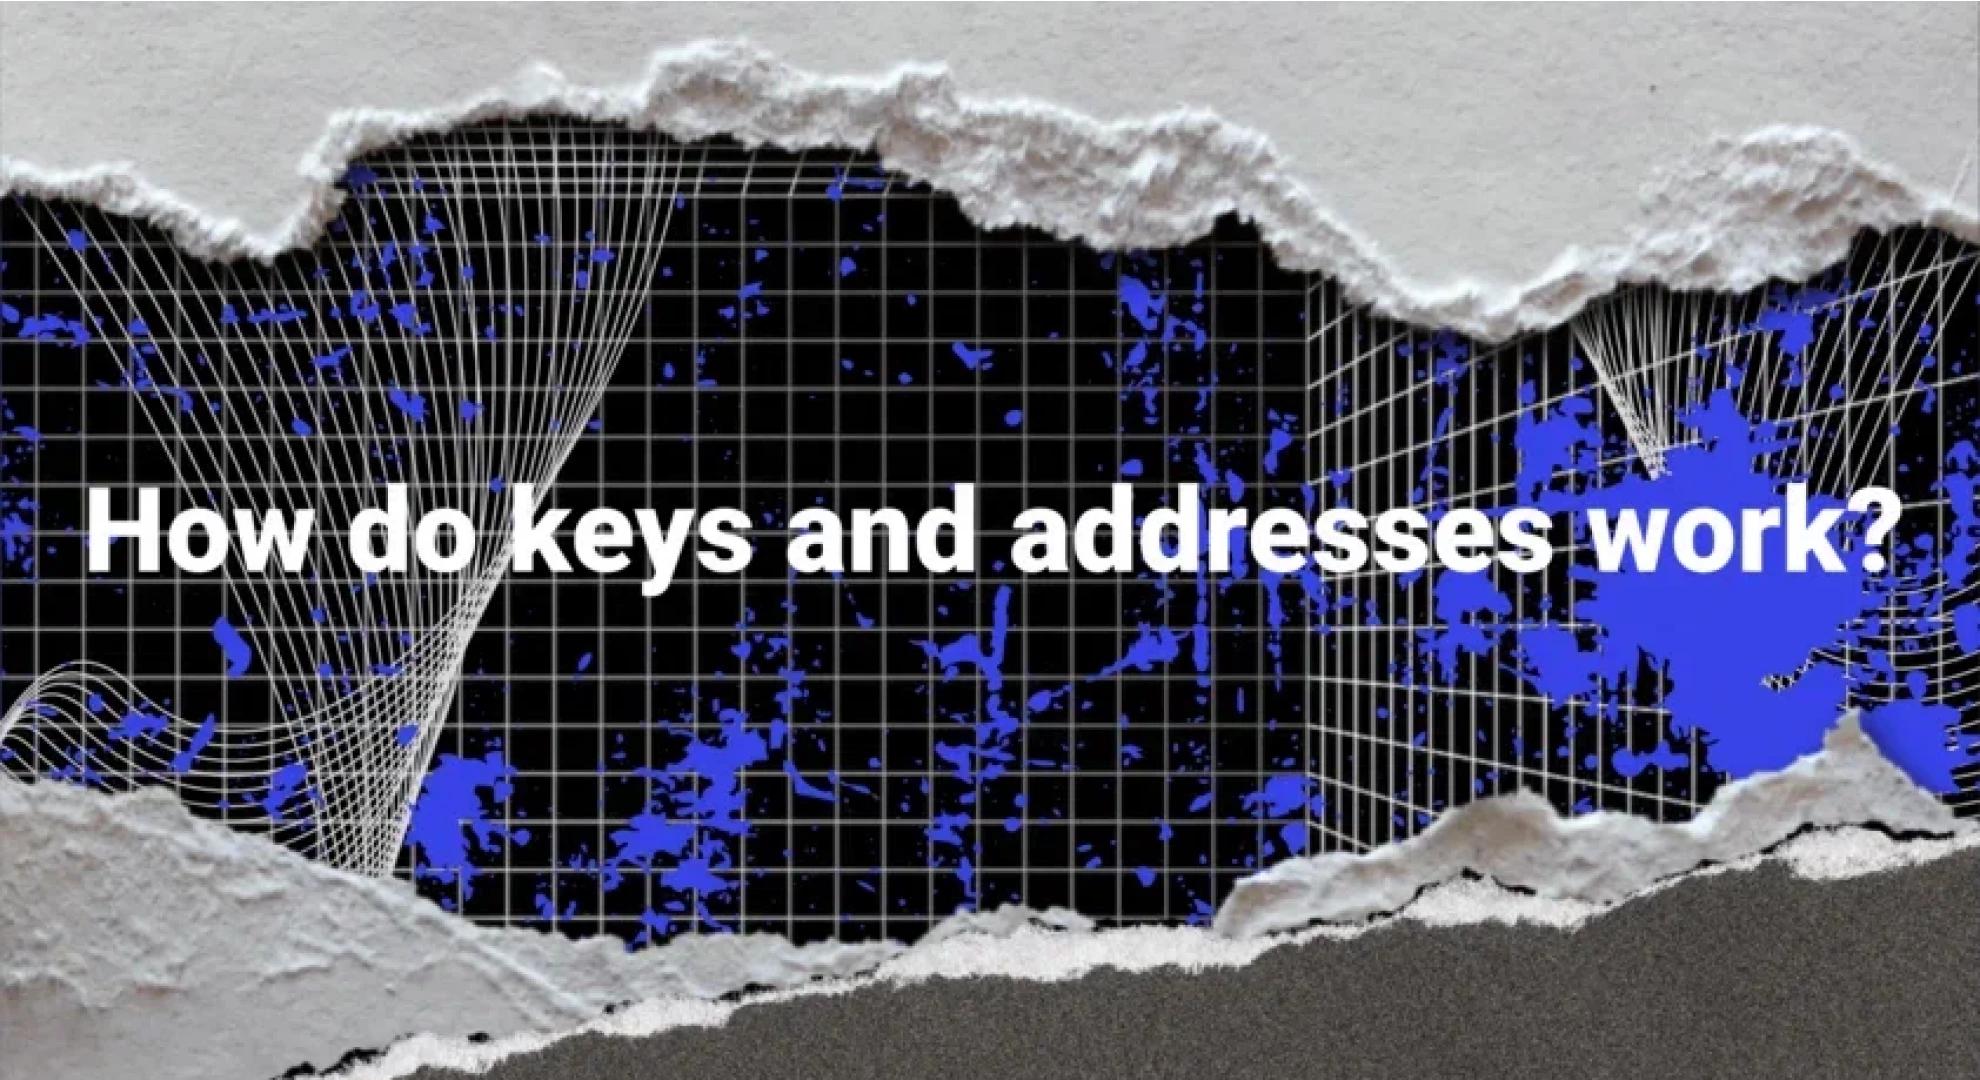 How do keys and addresses work?